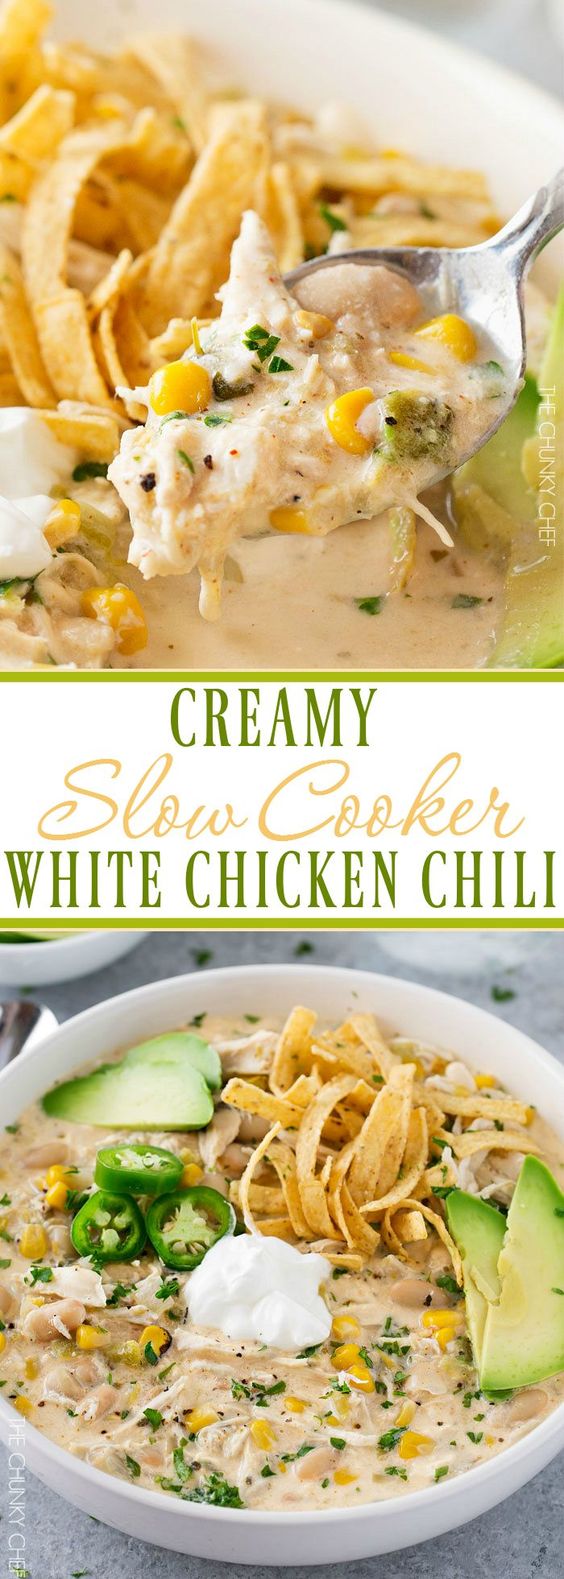 Slow Cooker Creamy White Chicken Chili - CUCINA DE YUNG